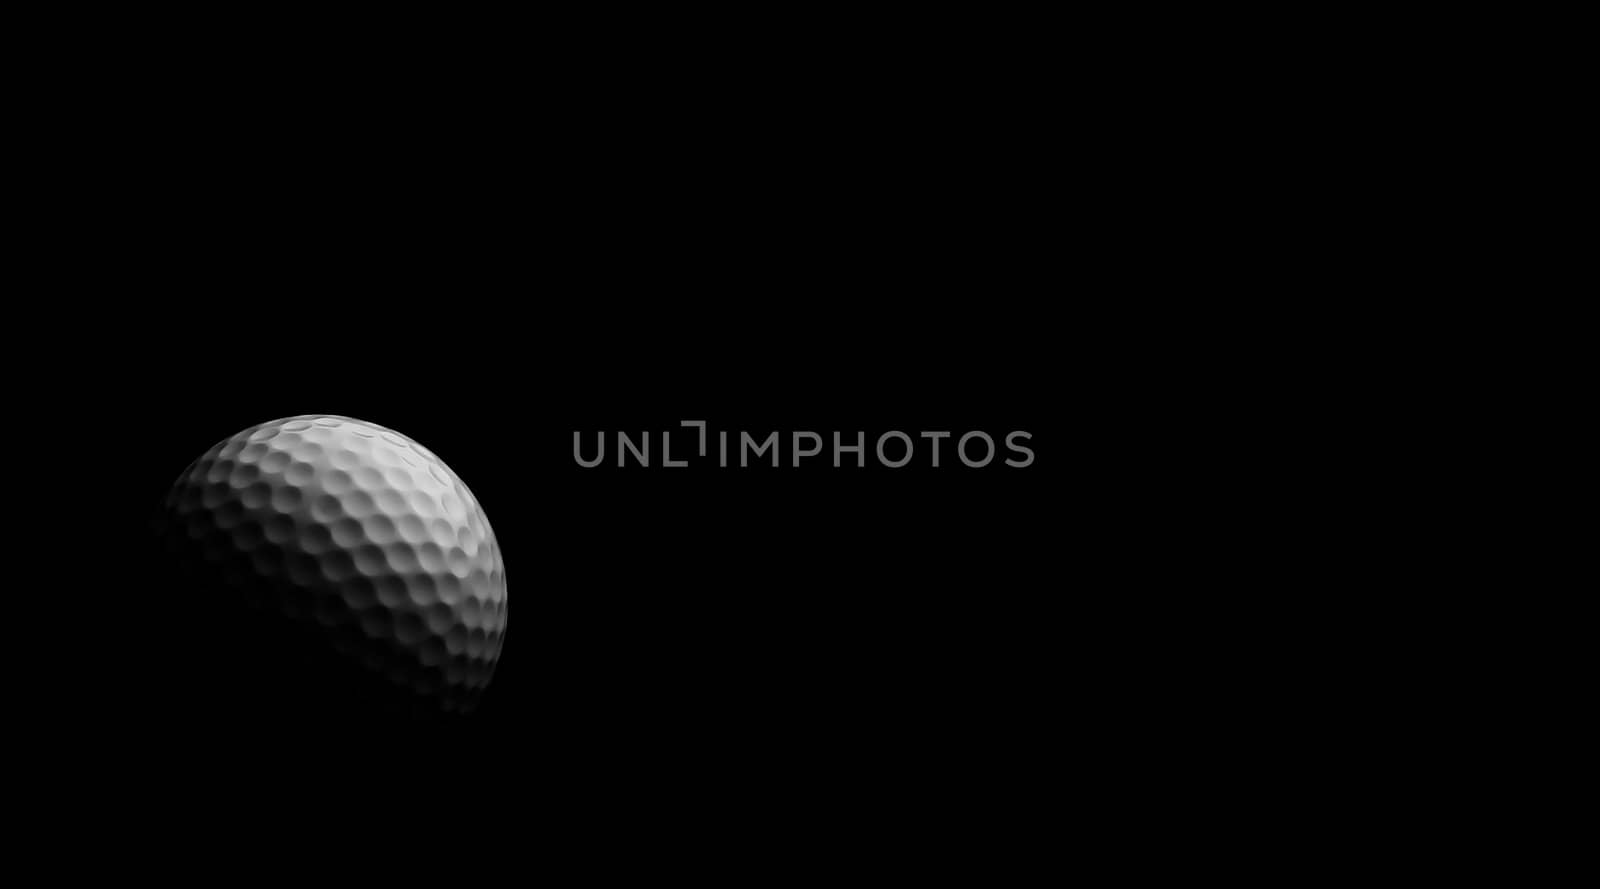 Golf ball under dramatic light, against black.